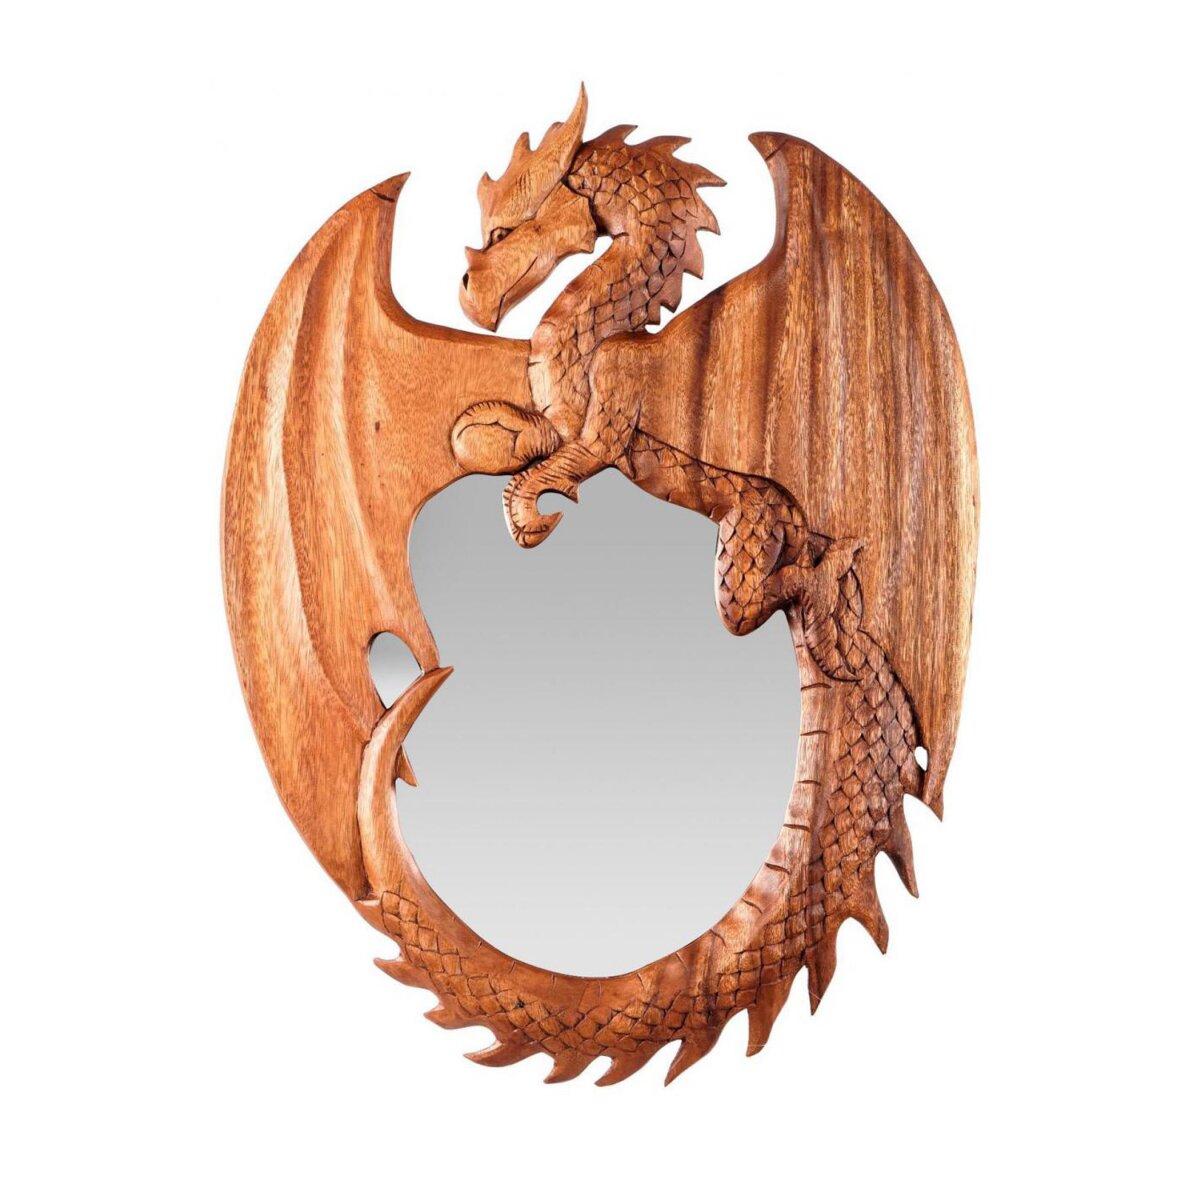 Wooden dragon mirror